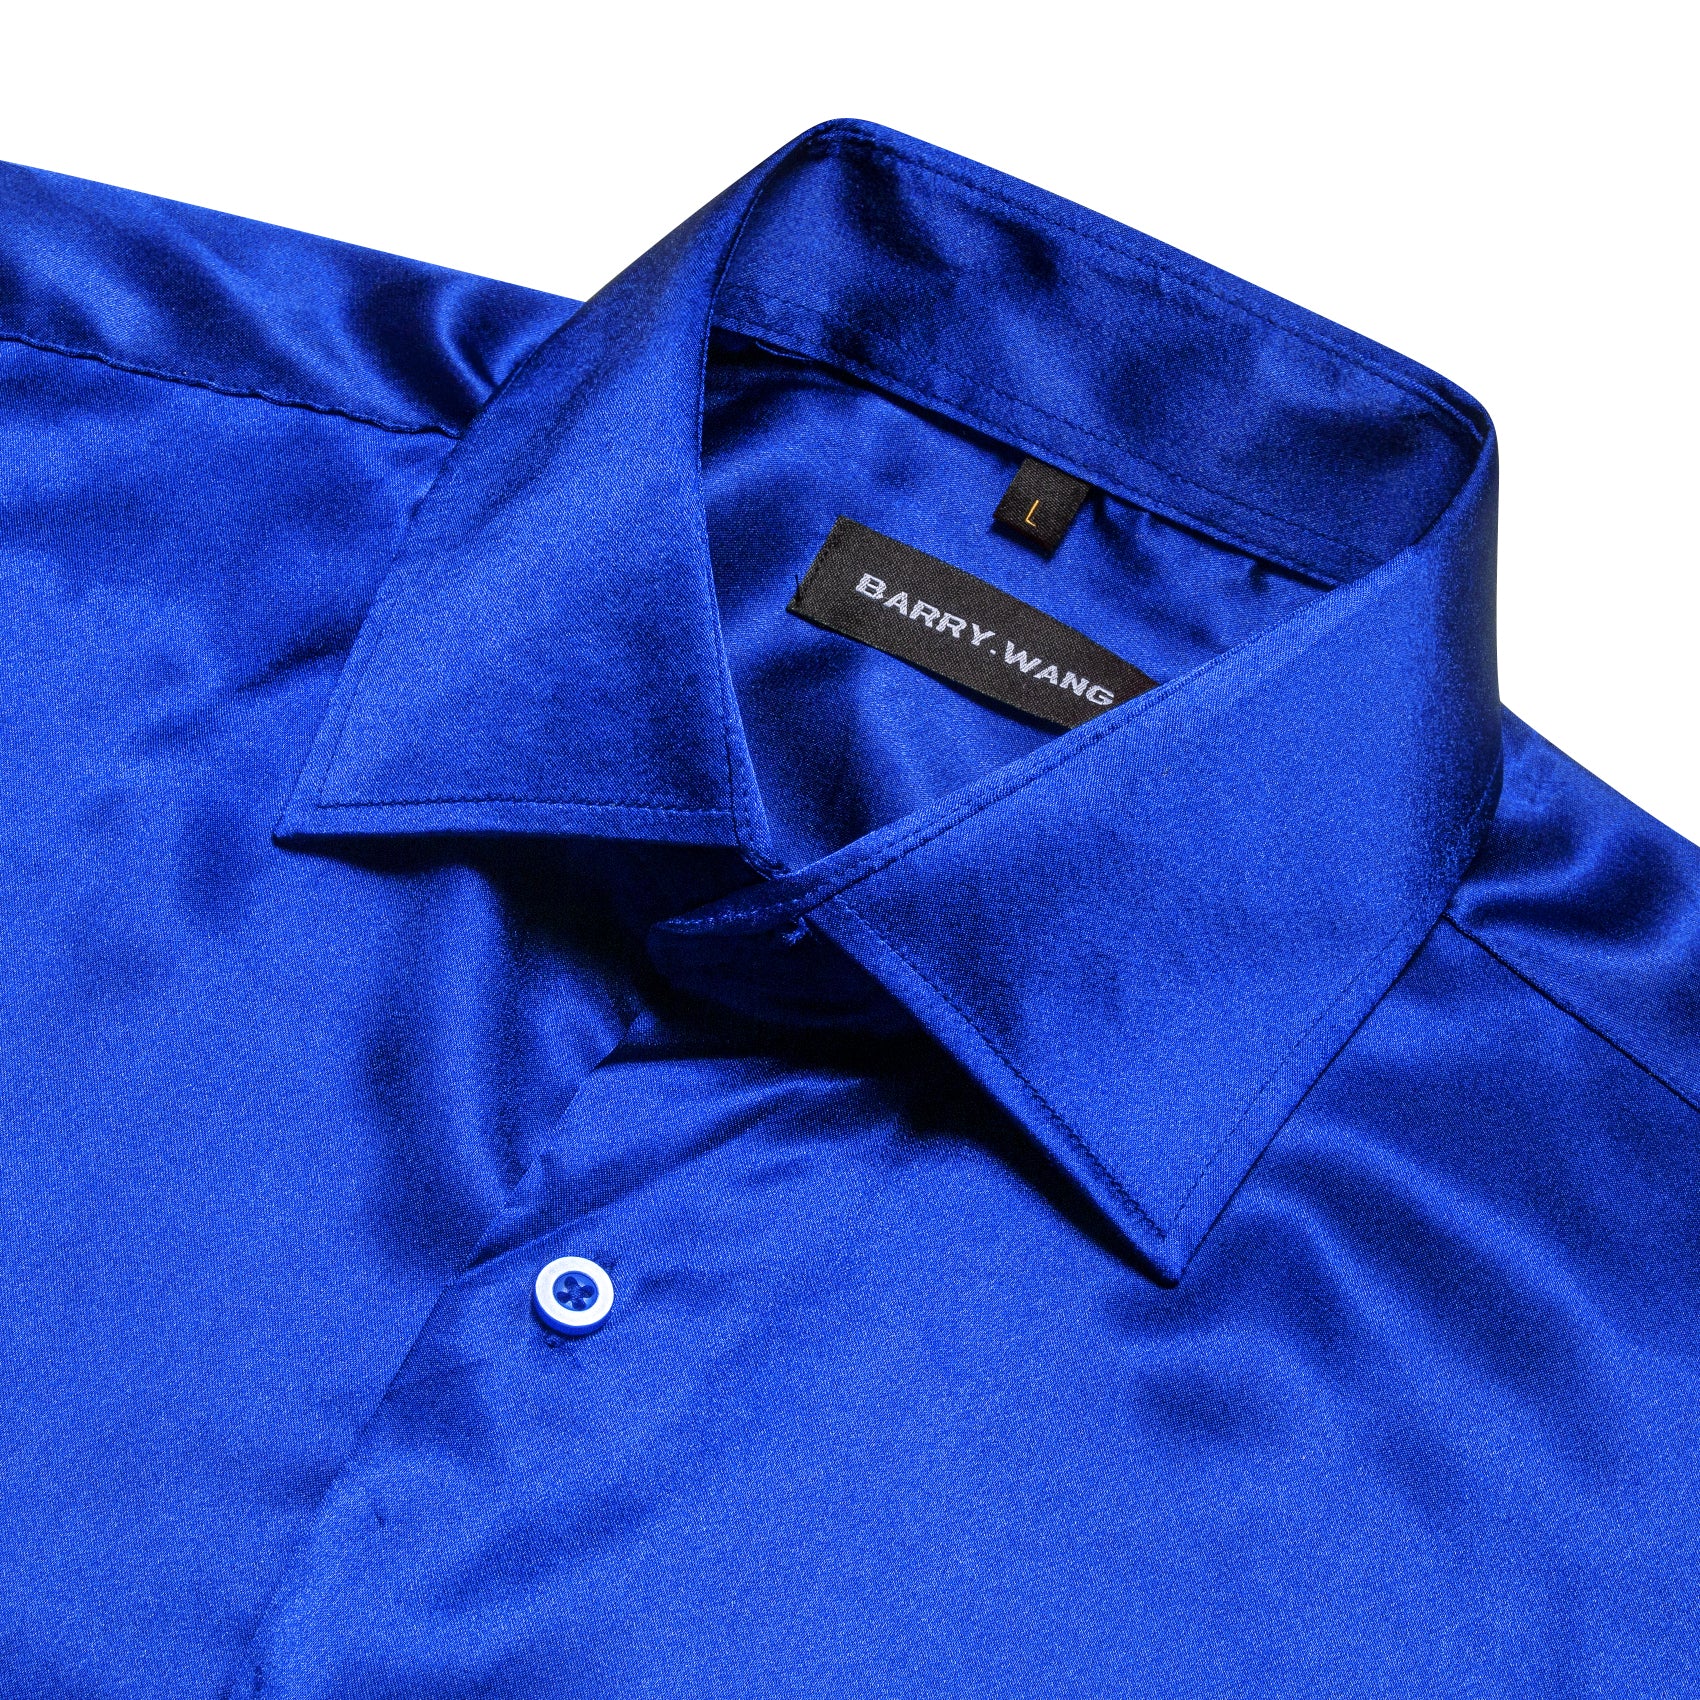 Barry.wang Bright Blue Solid Silk Shirt